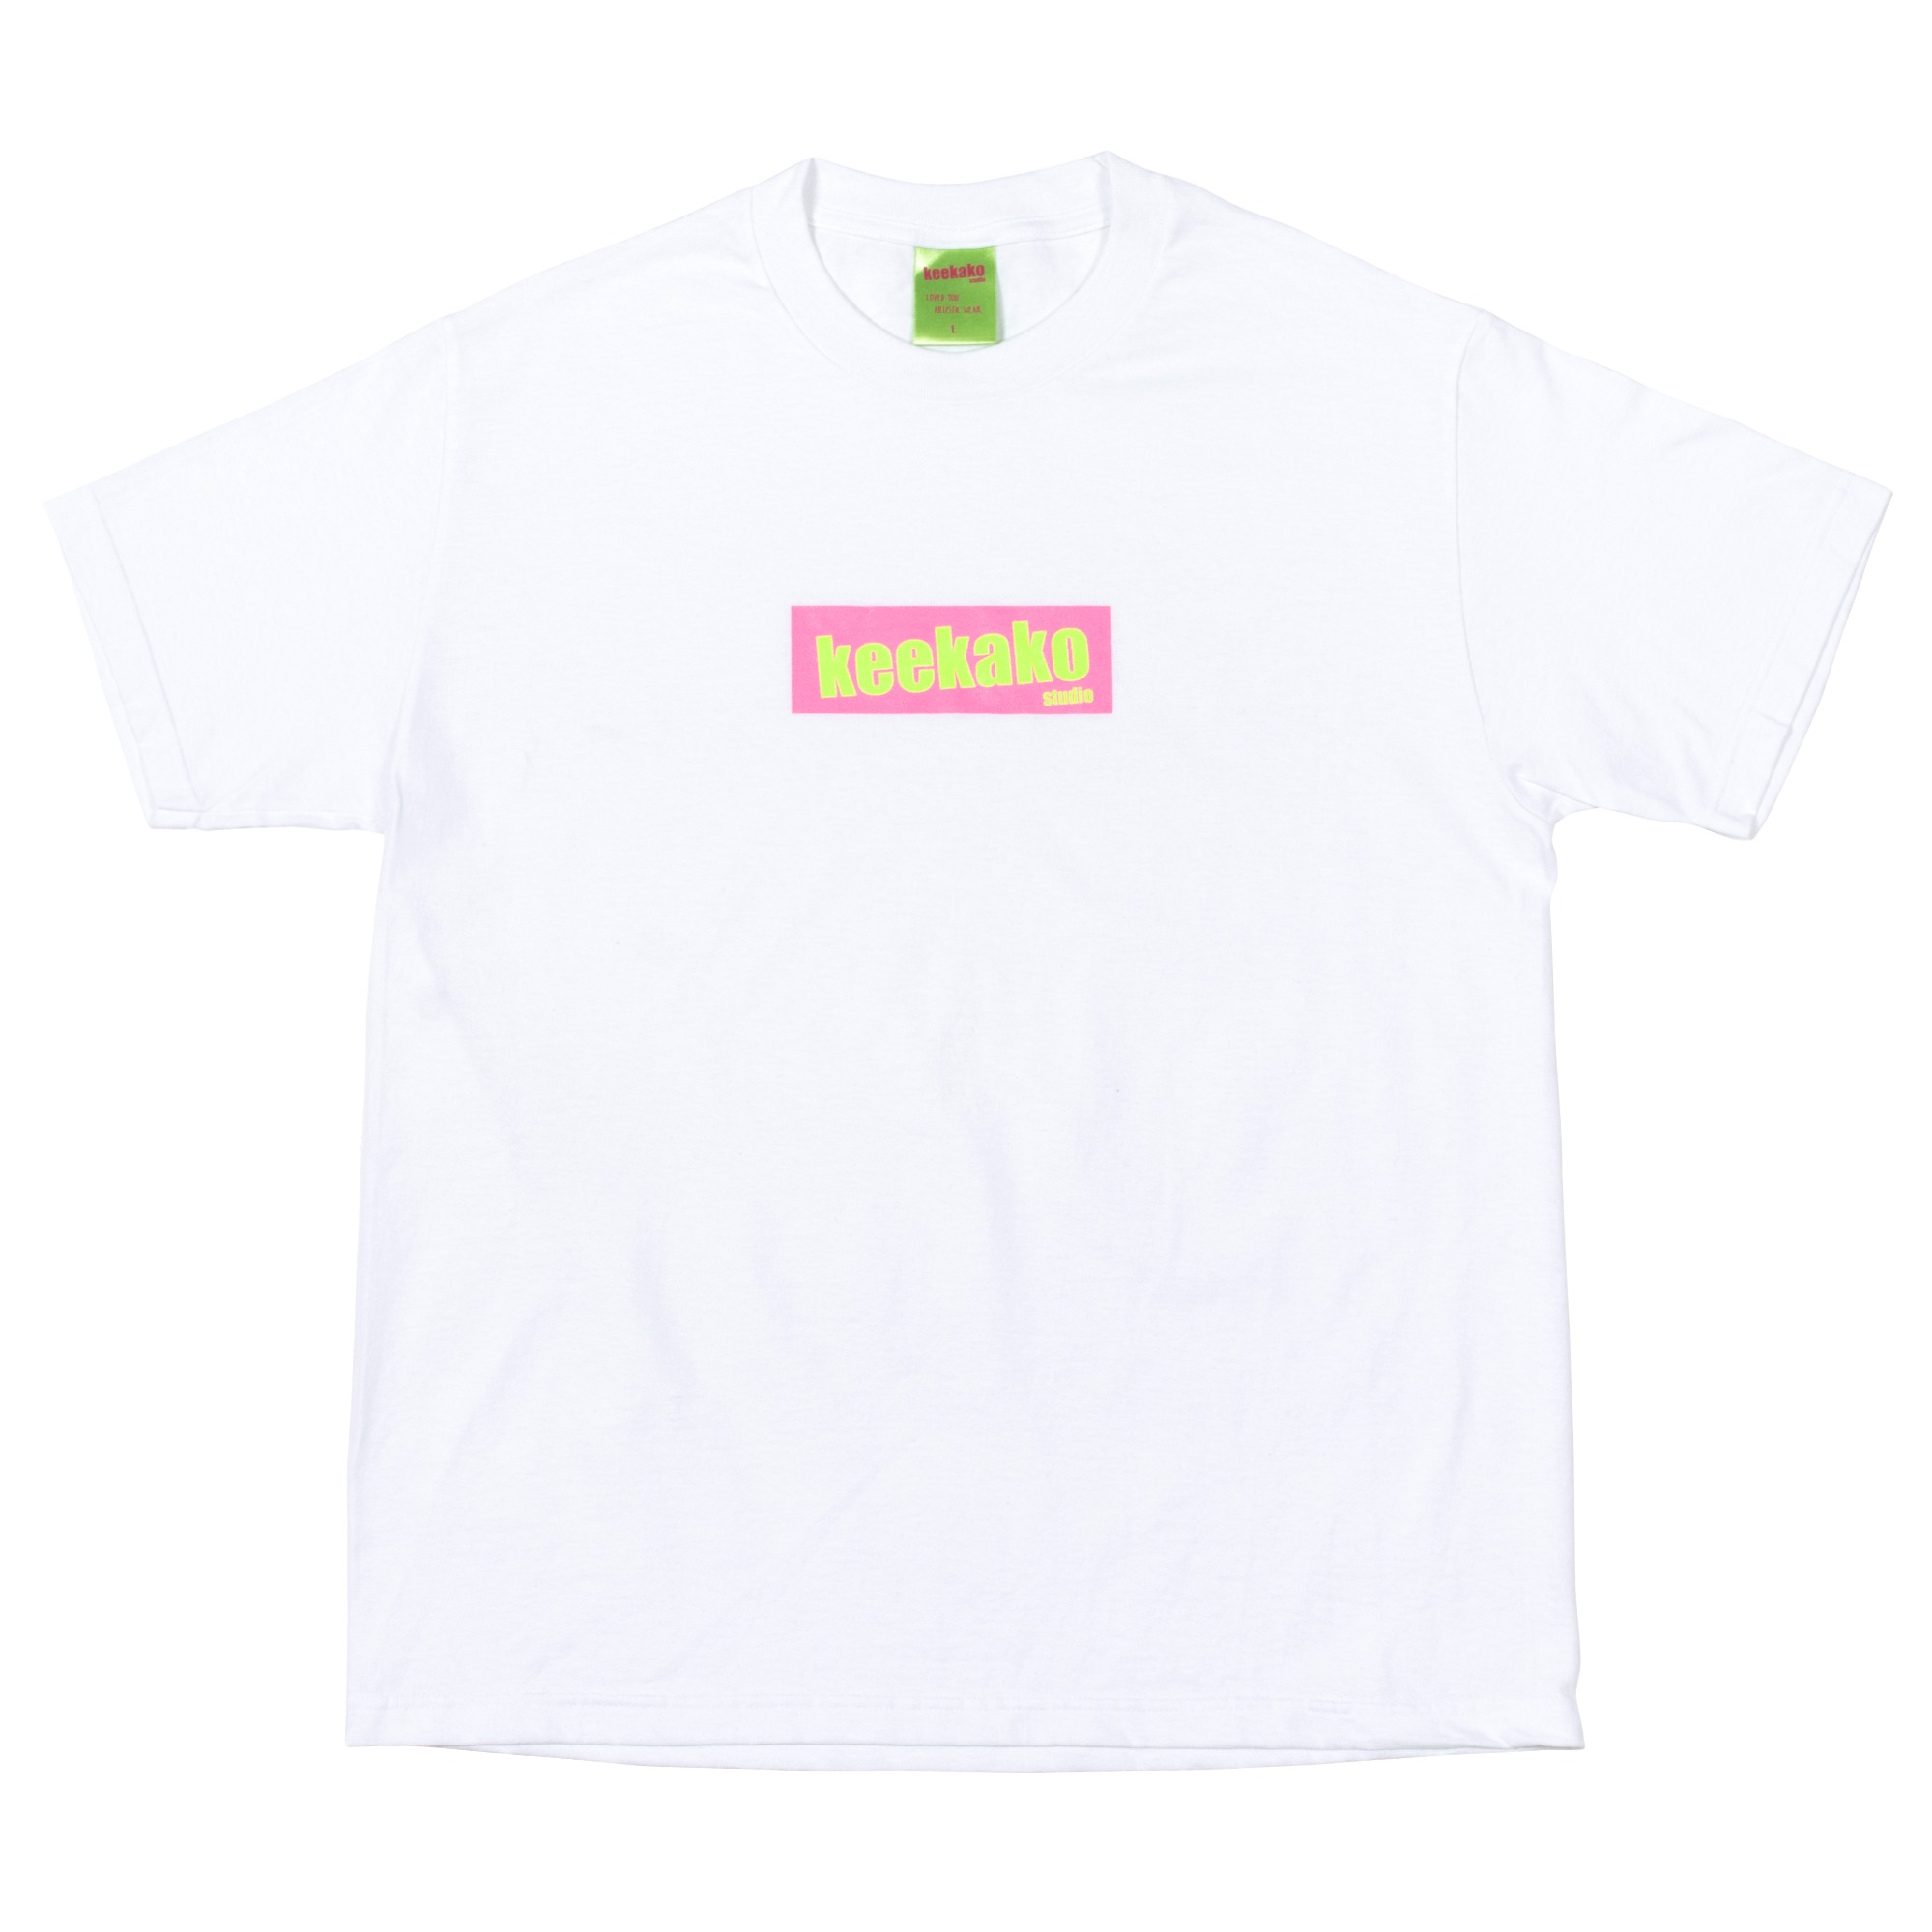 keekako box-logo t-shirt